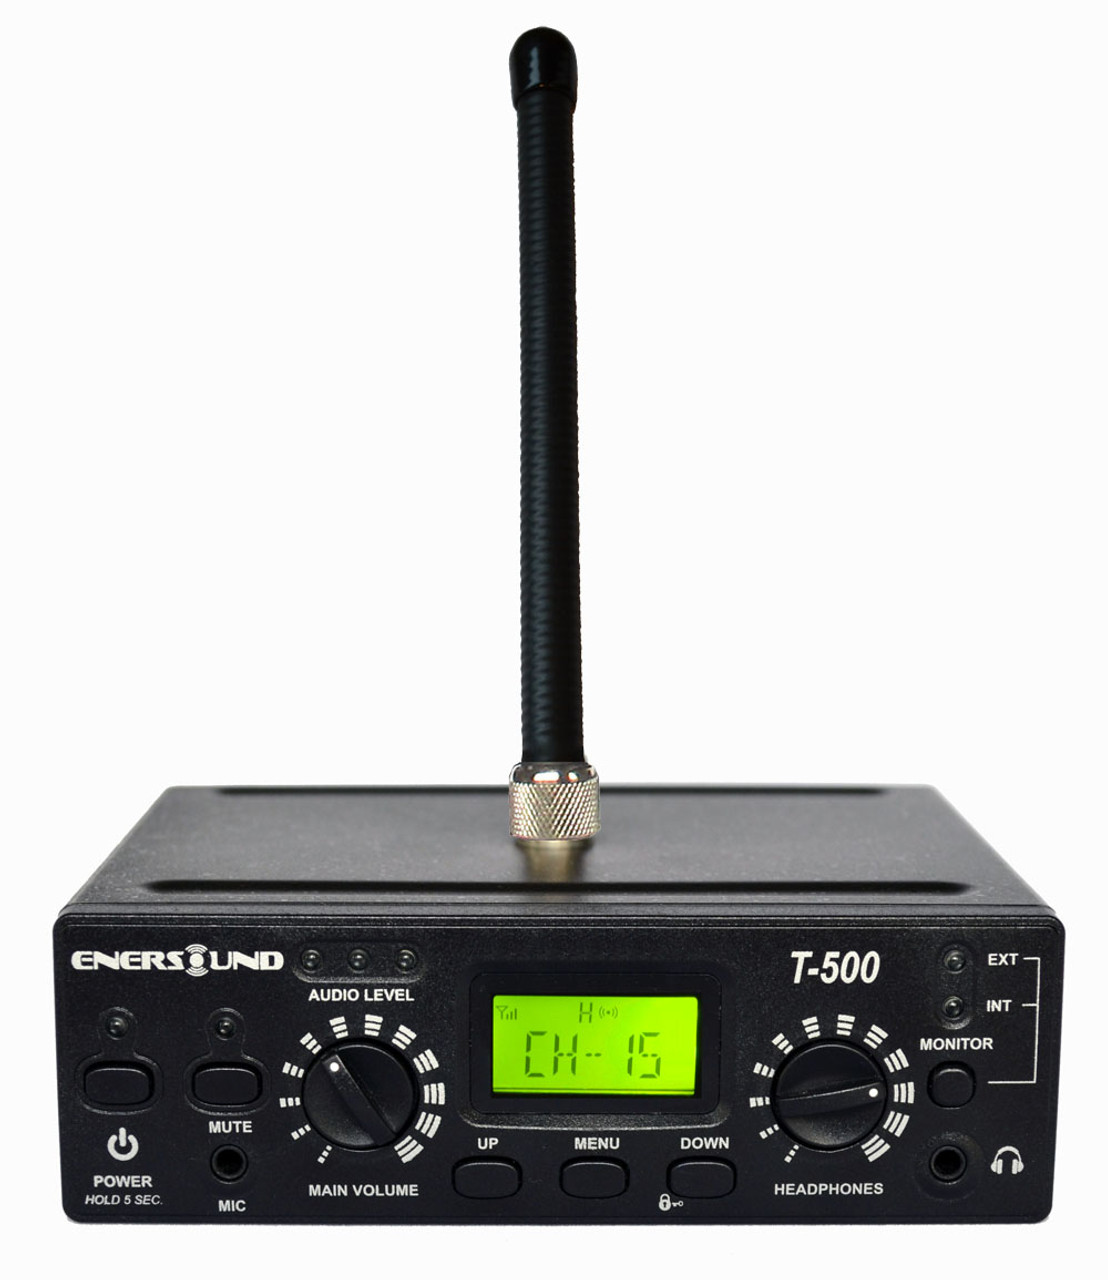 Enersound T-500 FM Multi-Channel Assistive Listening Transmitter 72-76 MHz  (Limited Lifetime Warranty) - Translation Equipment